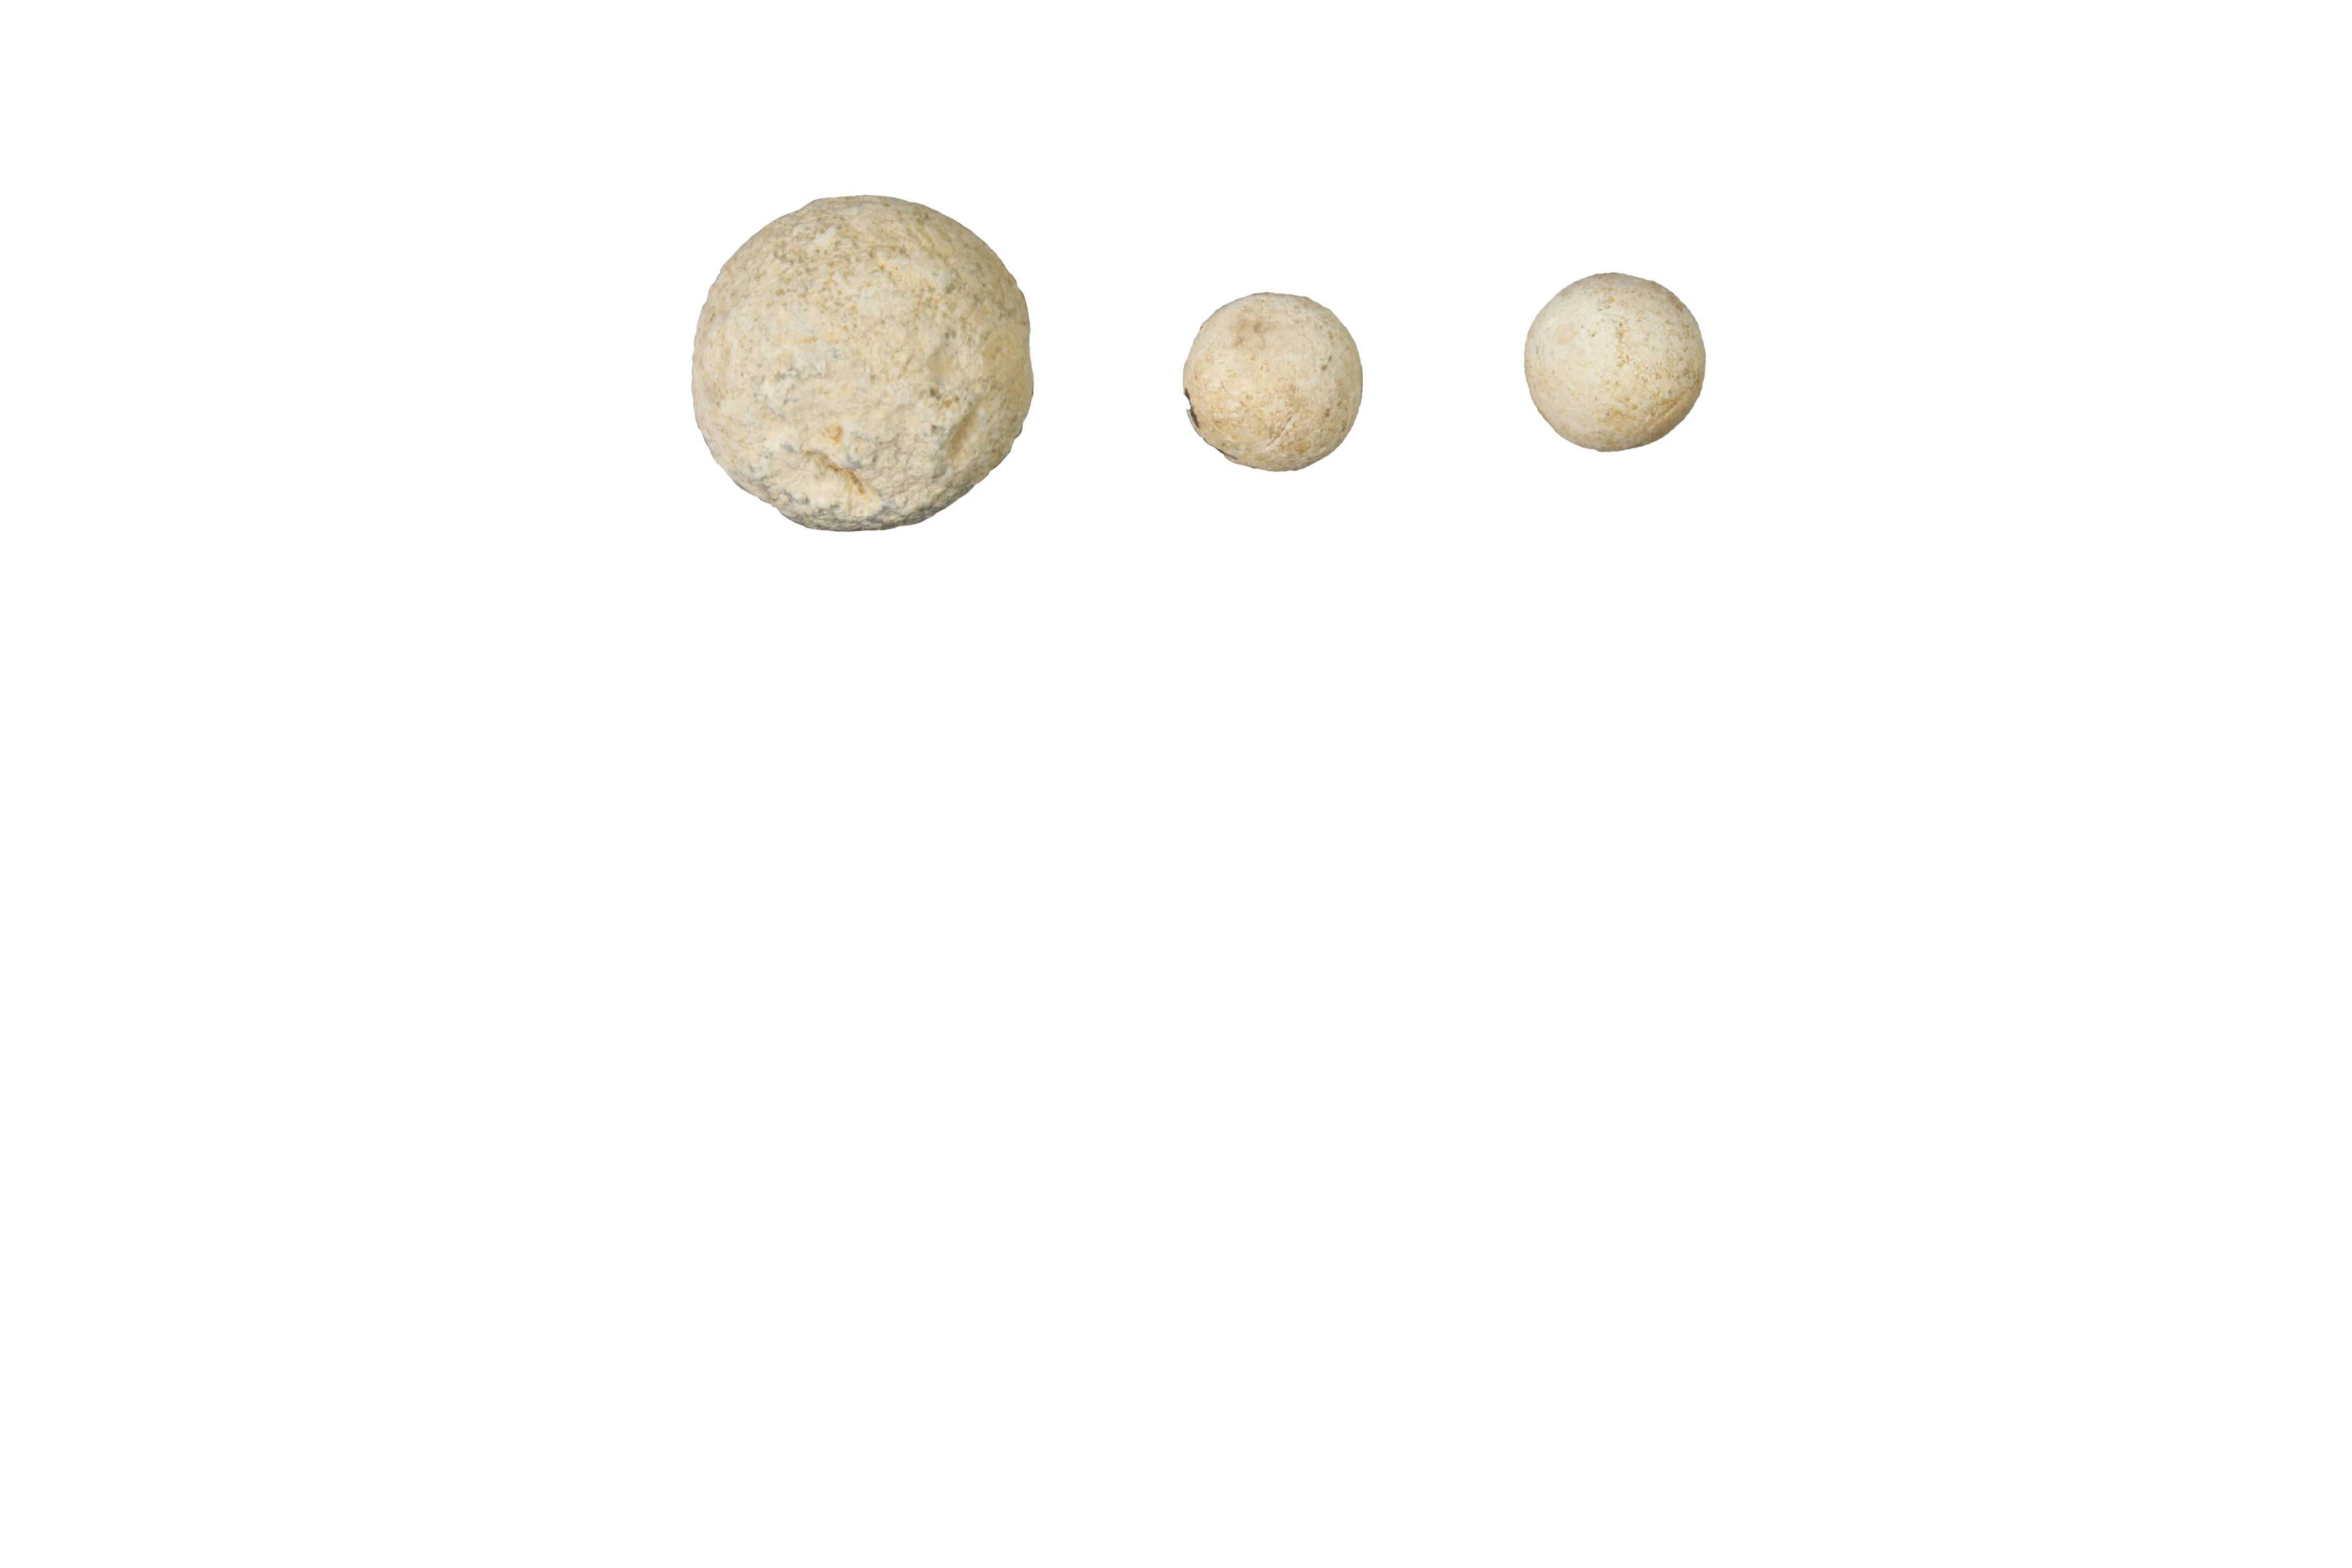 Photograph of three musket balls